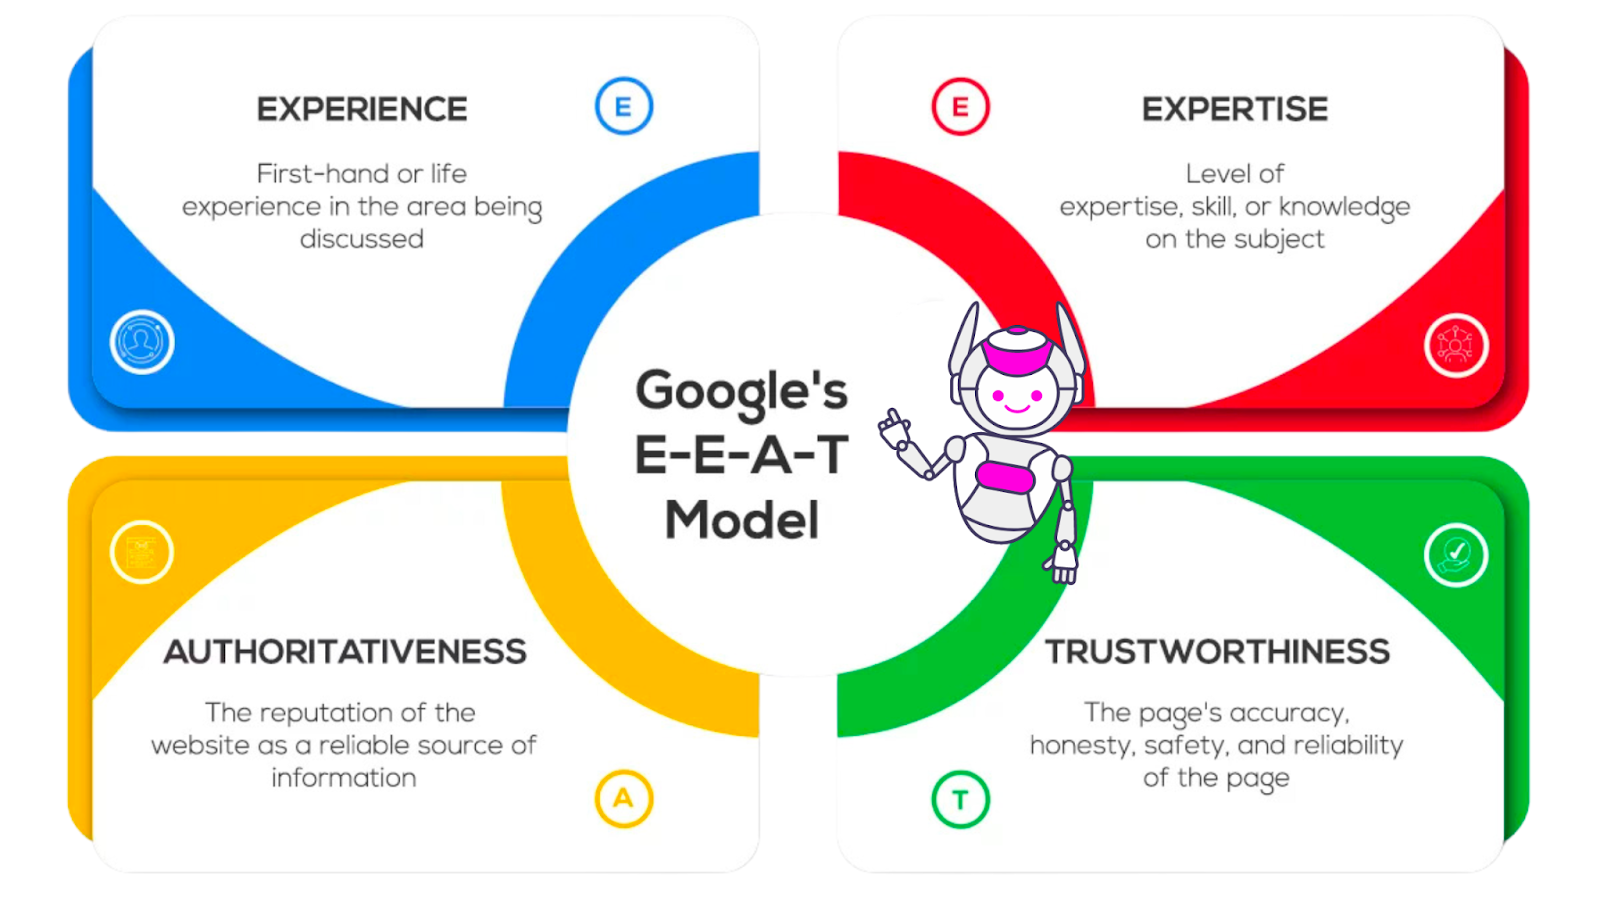 Google's E-E-A-T Model